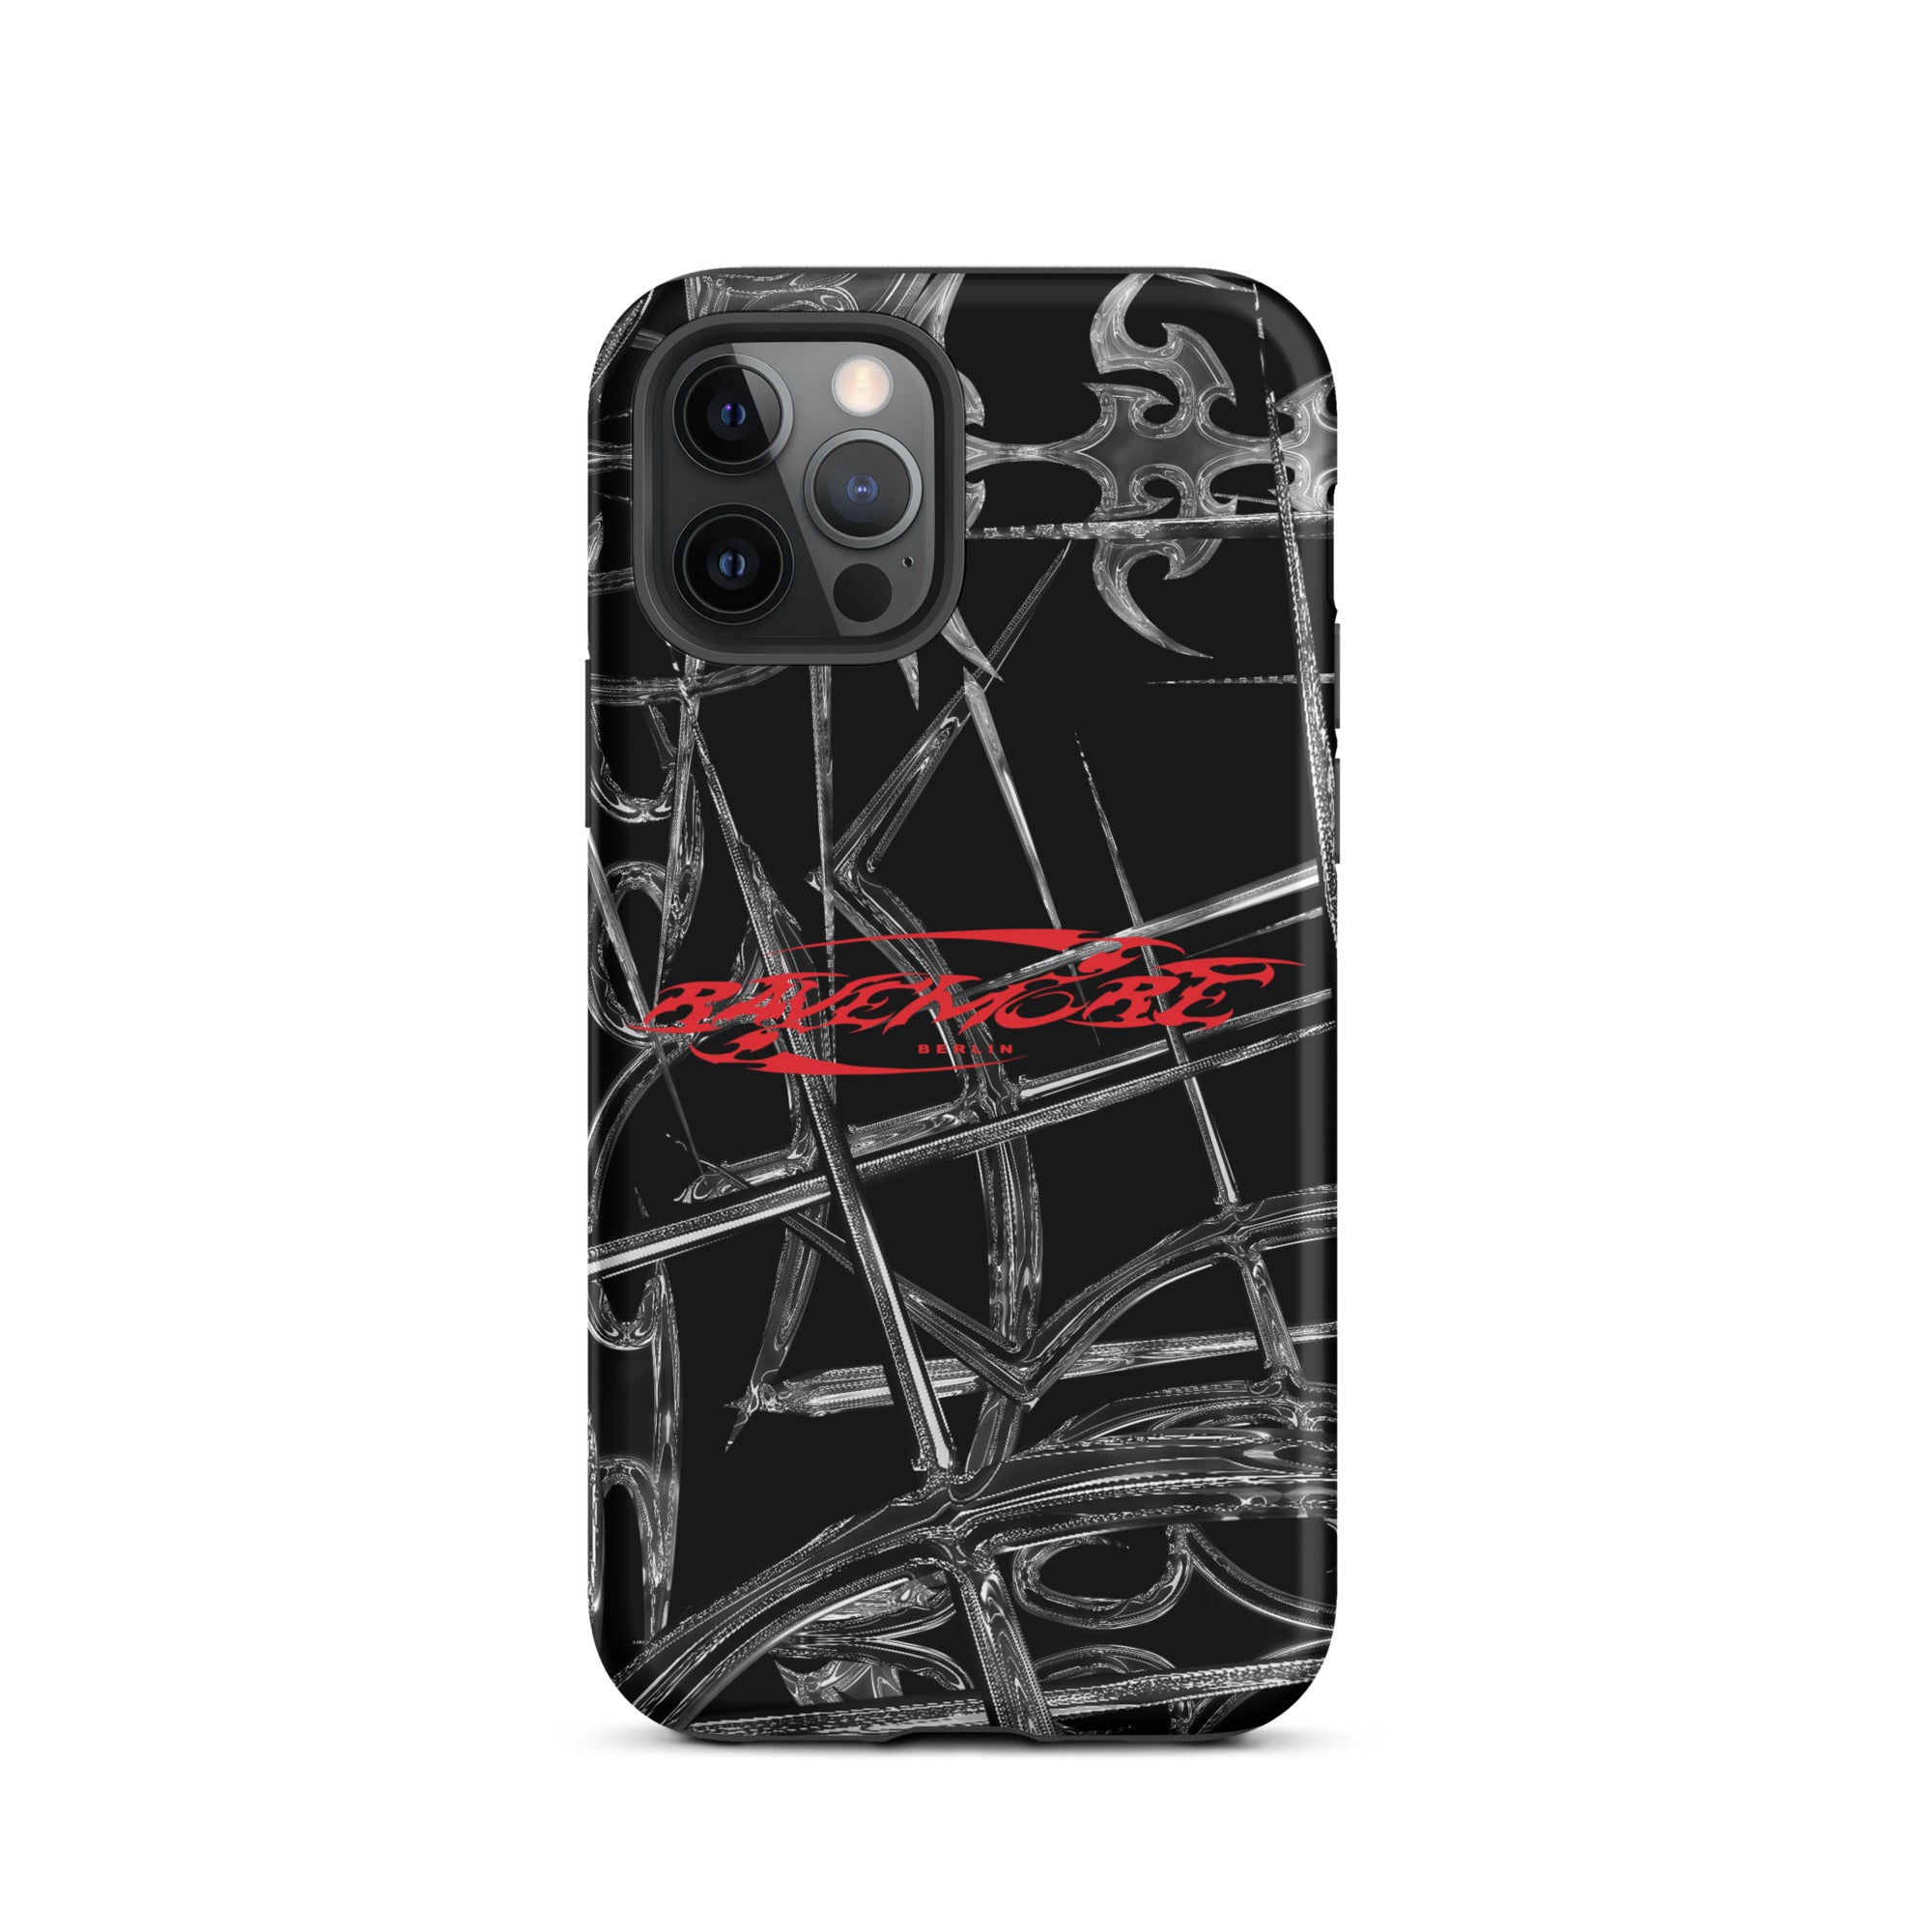 BLADE smartphone case